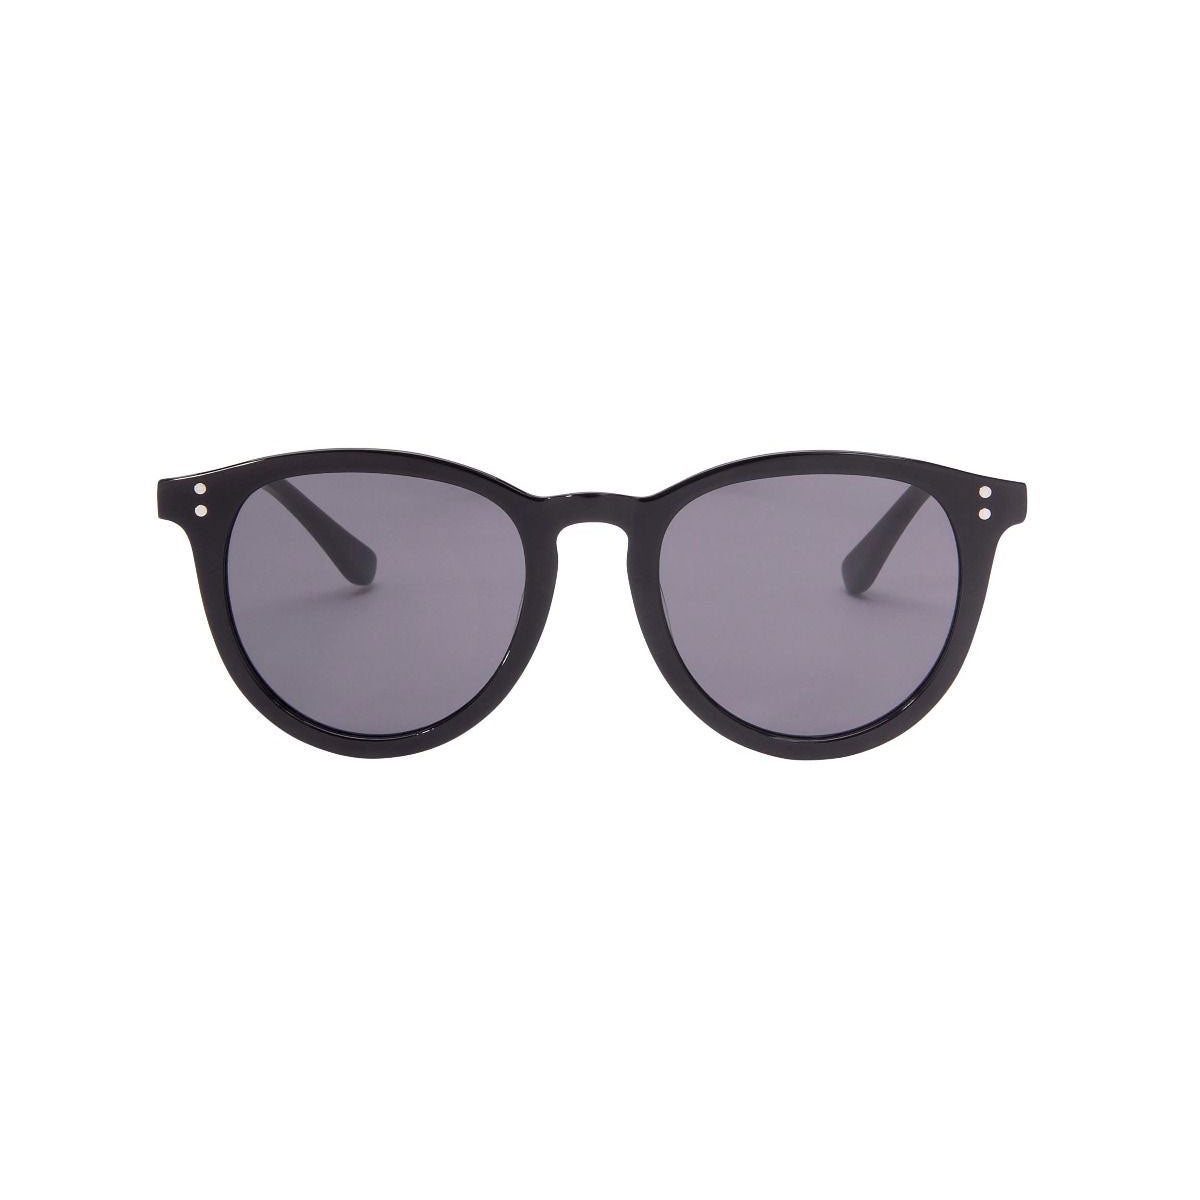 Diego - Rectangle Black Stylish Sunglasses | ANRRI